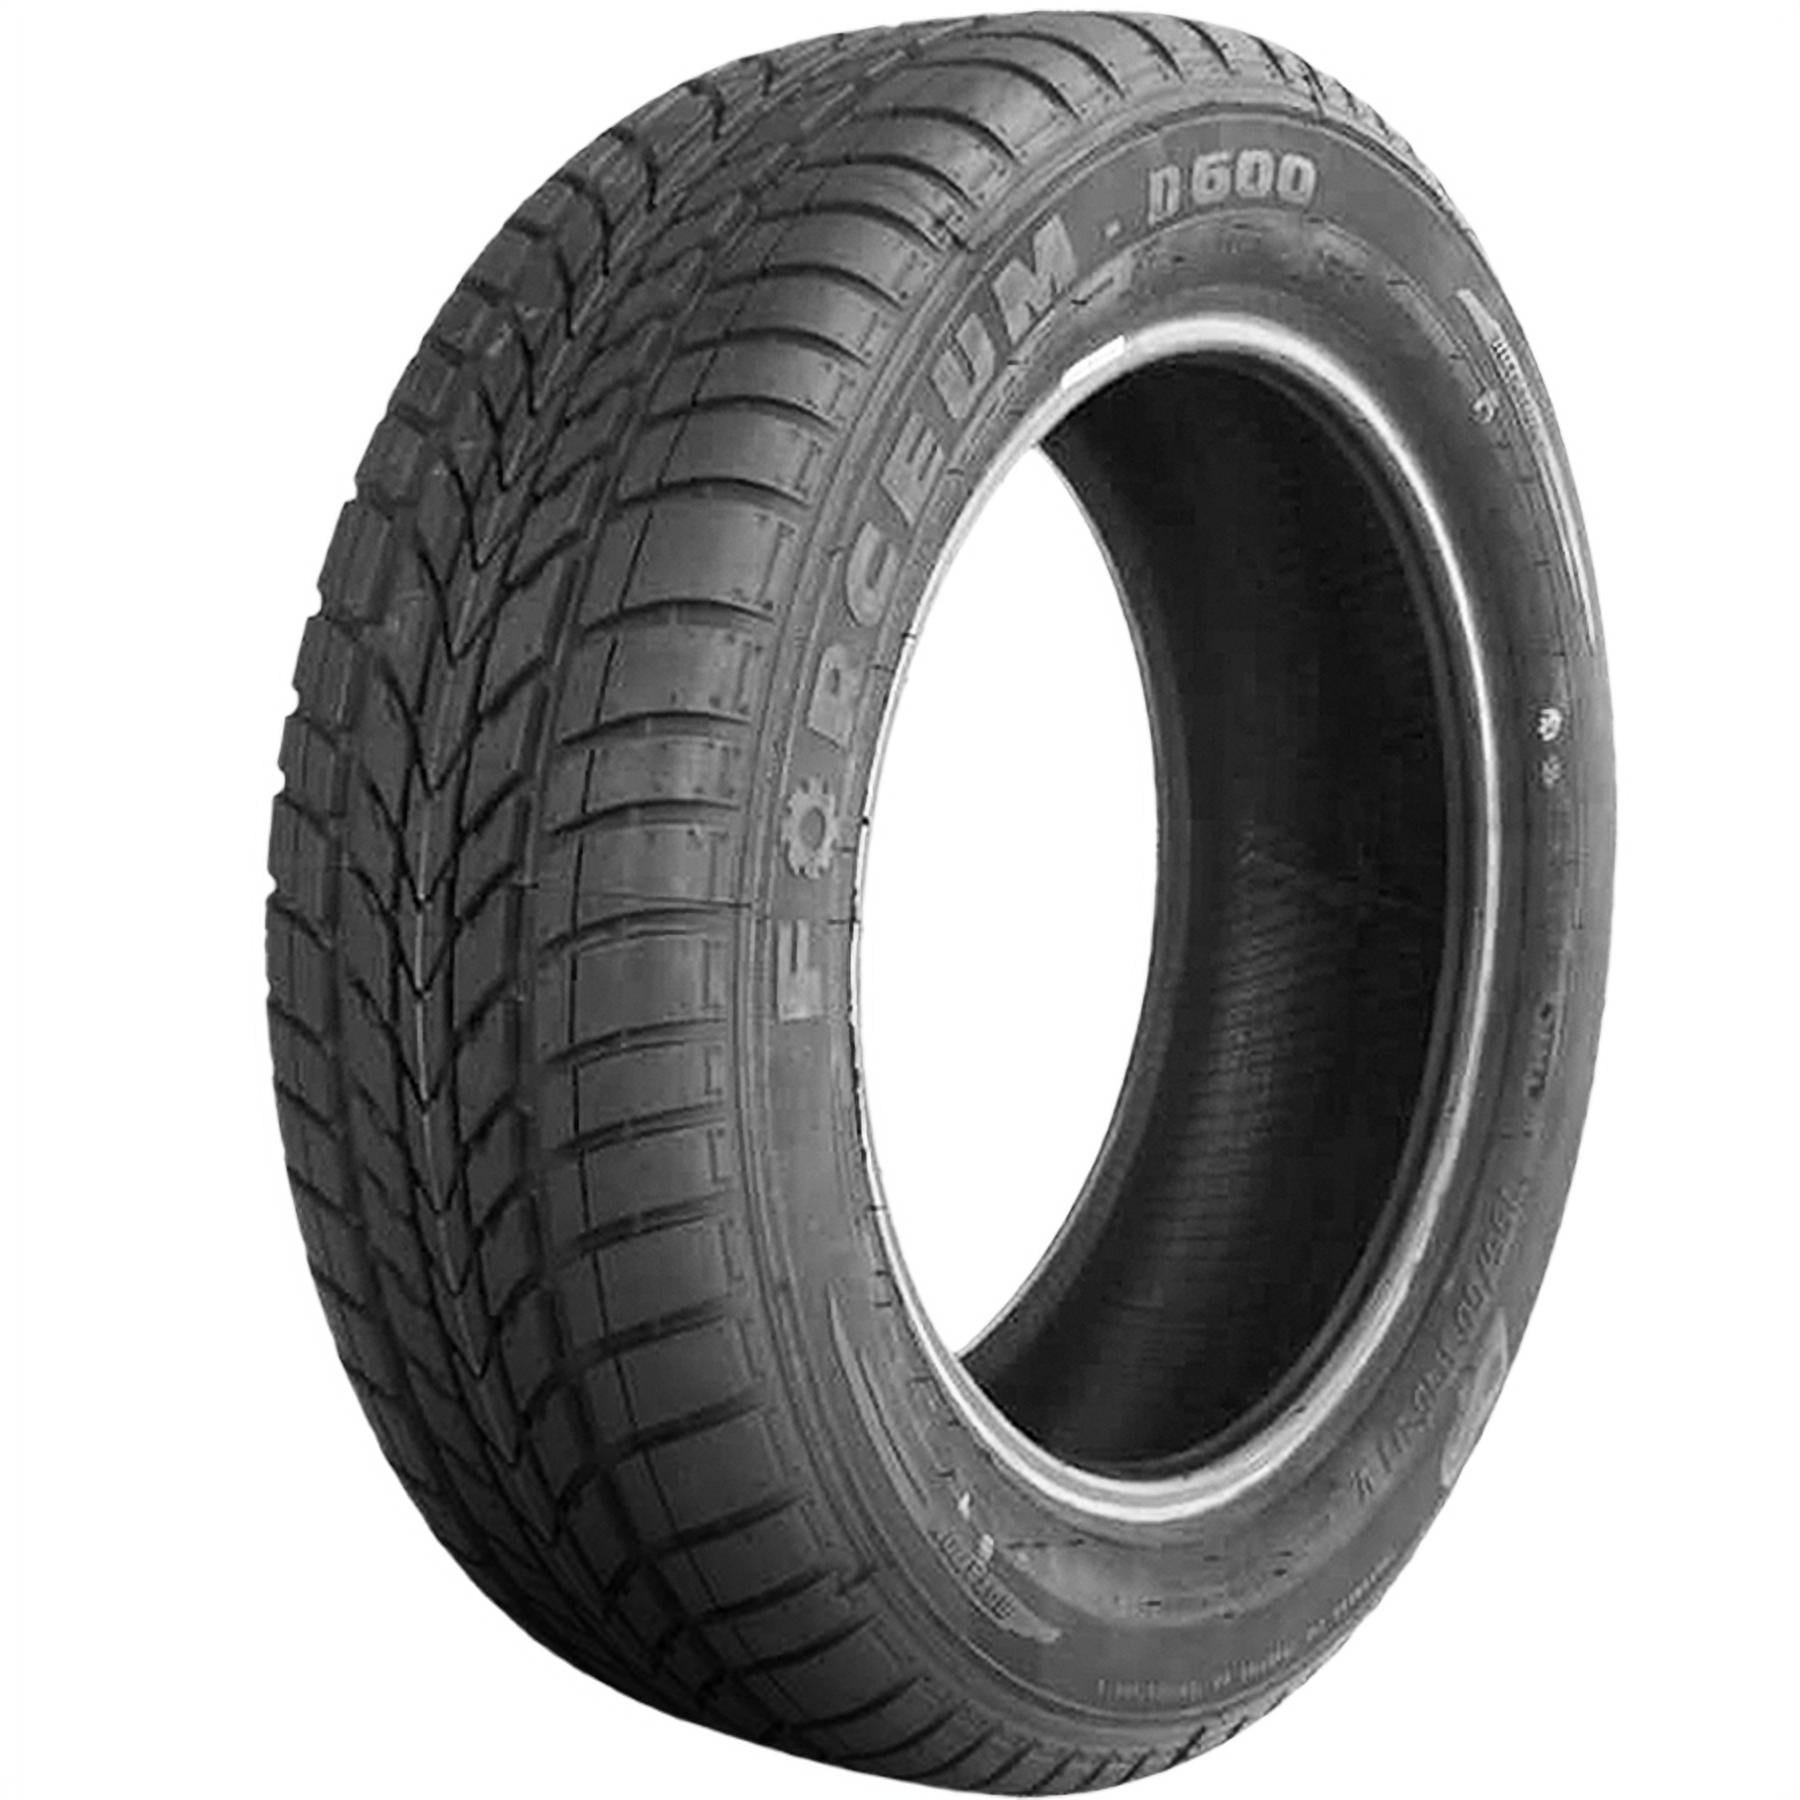 Season Radial Tire-195/60R14 86H Westlake RP18 All